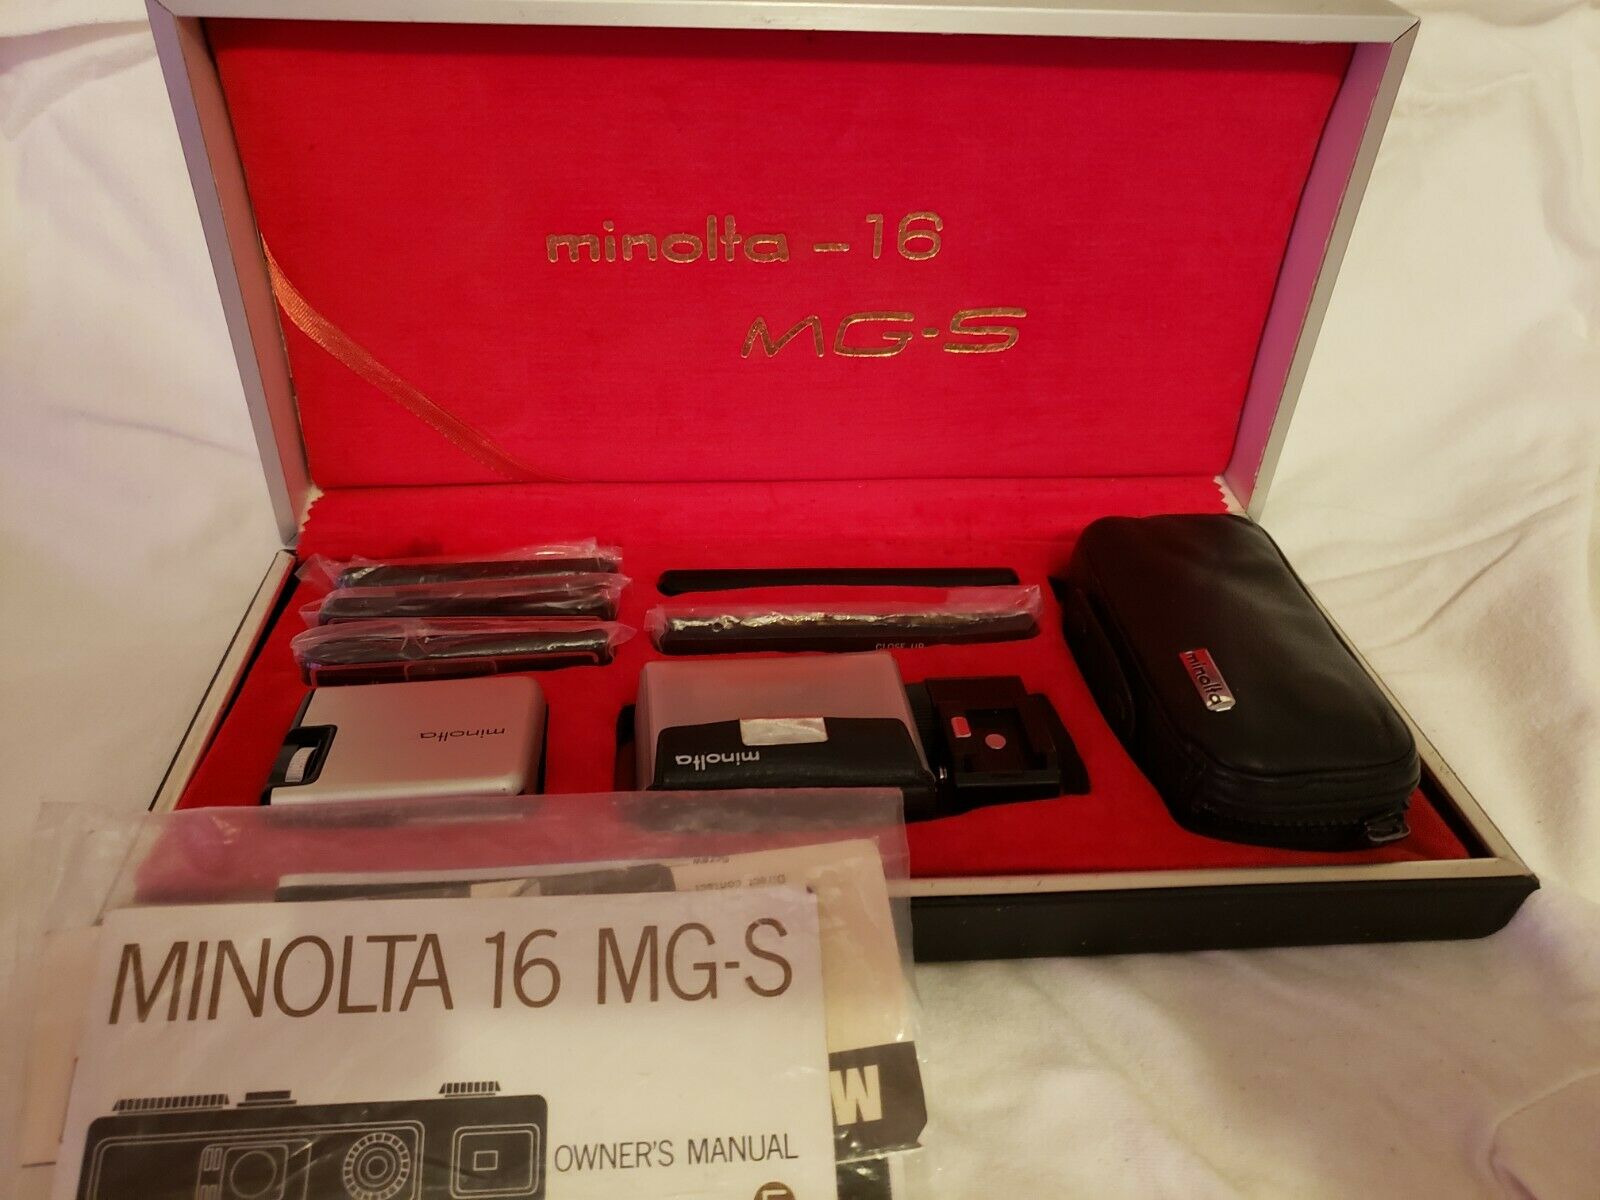 Minolta-16 Mg-s Subminiature “spy” Camera - Complete Kit W/accessories